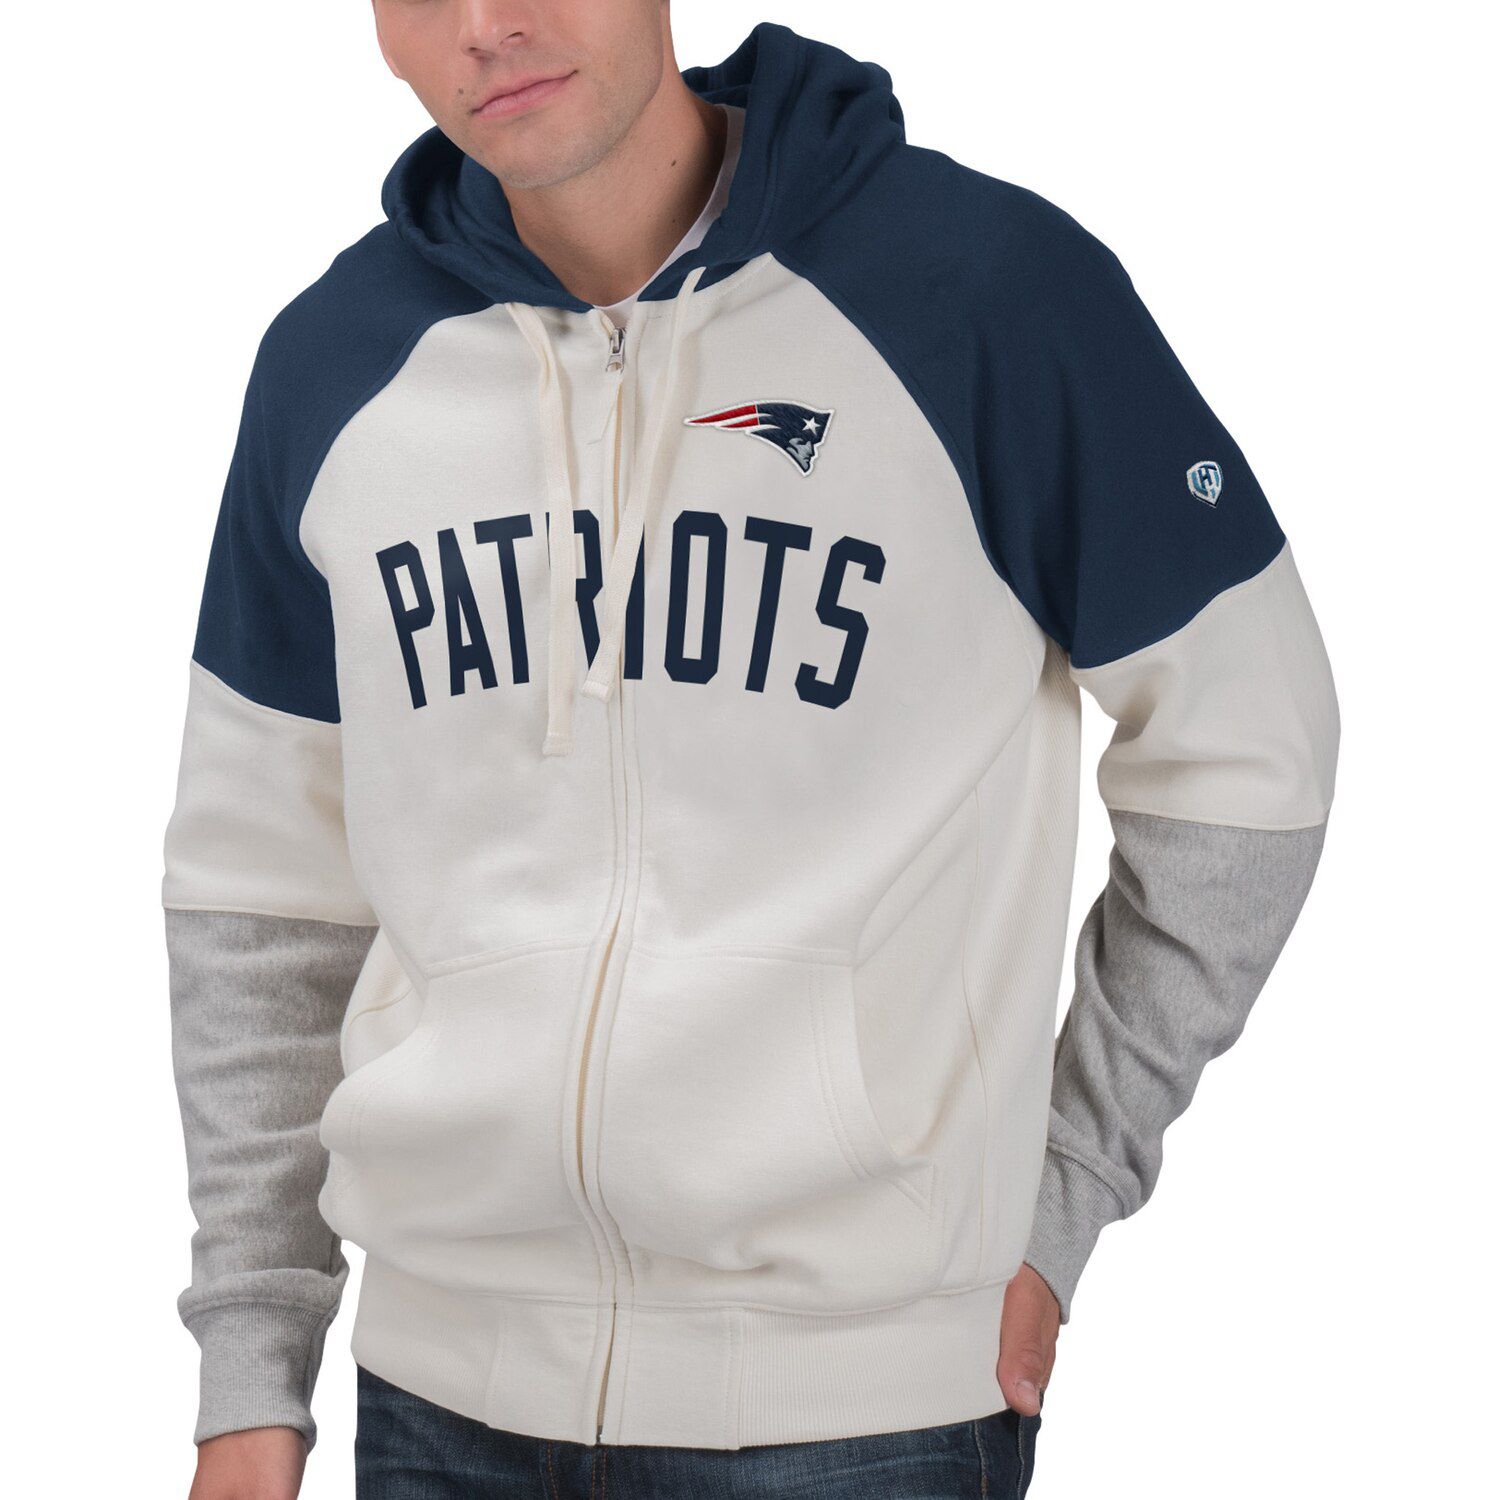 patriots zipper hoodie